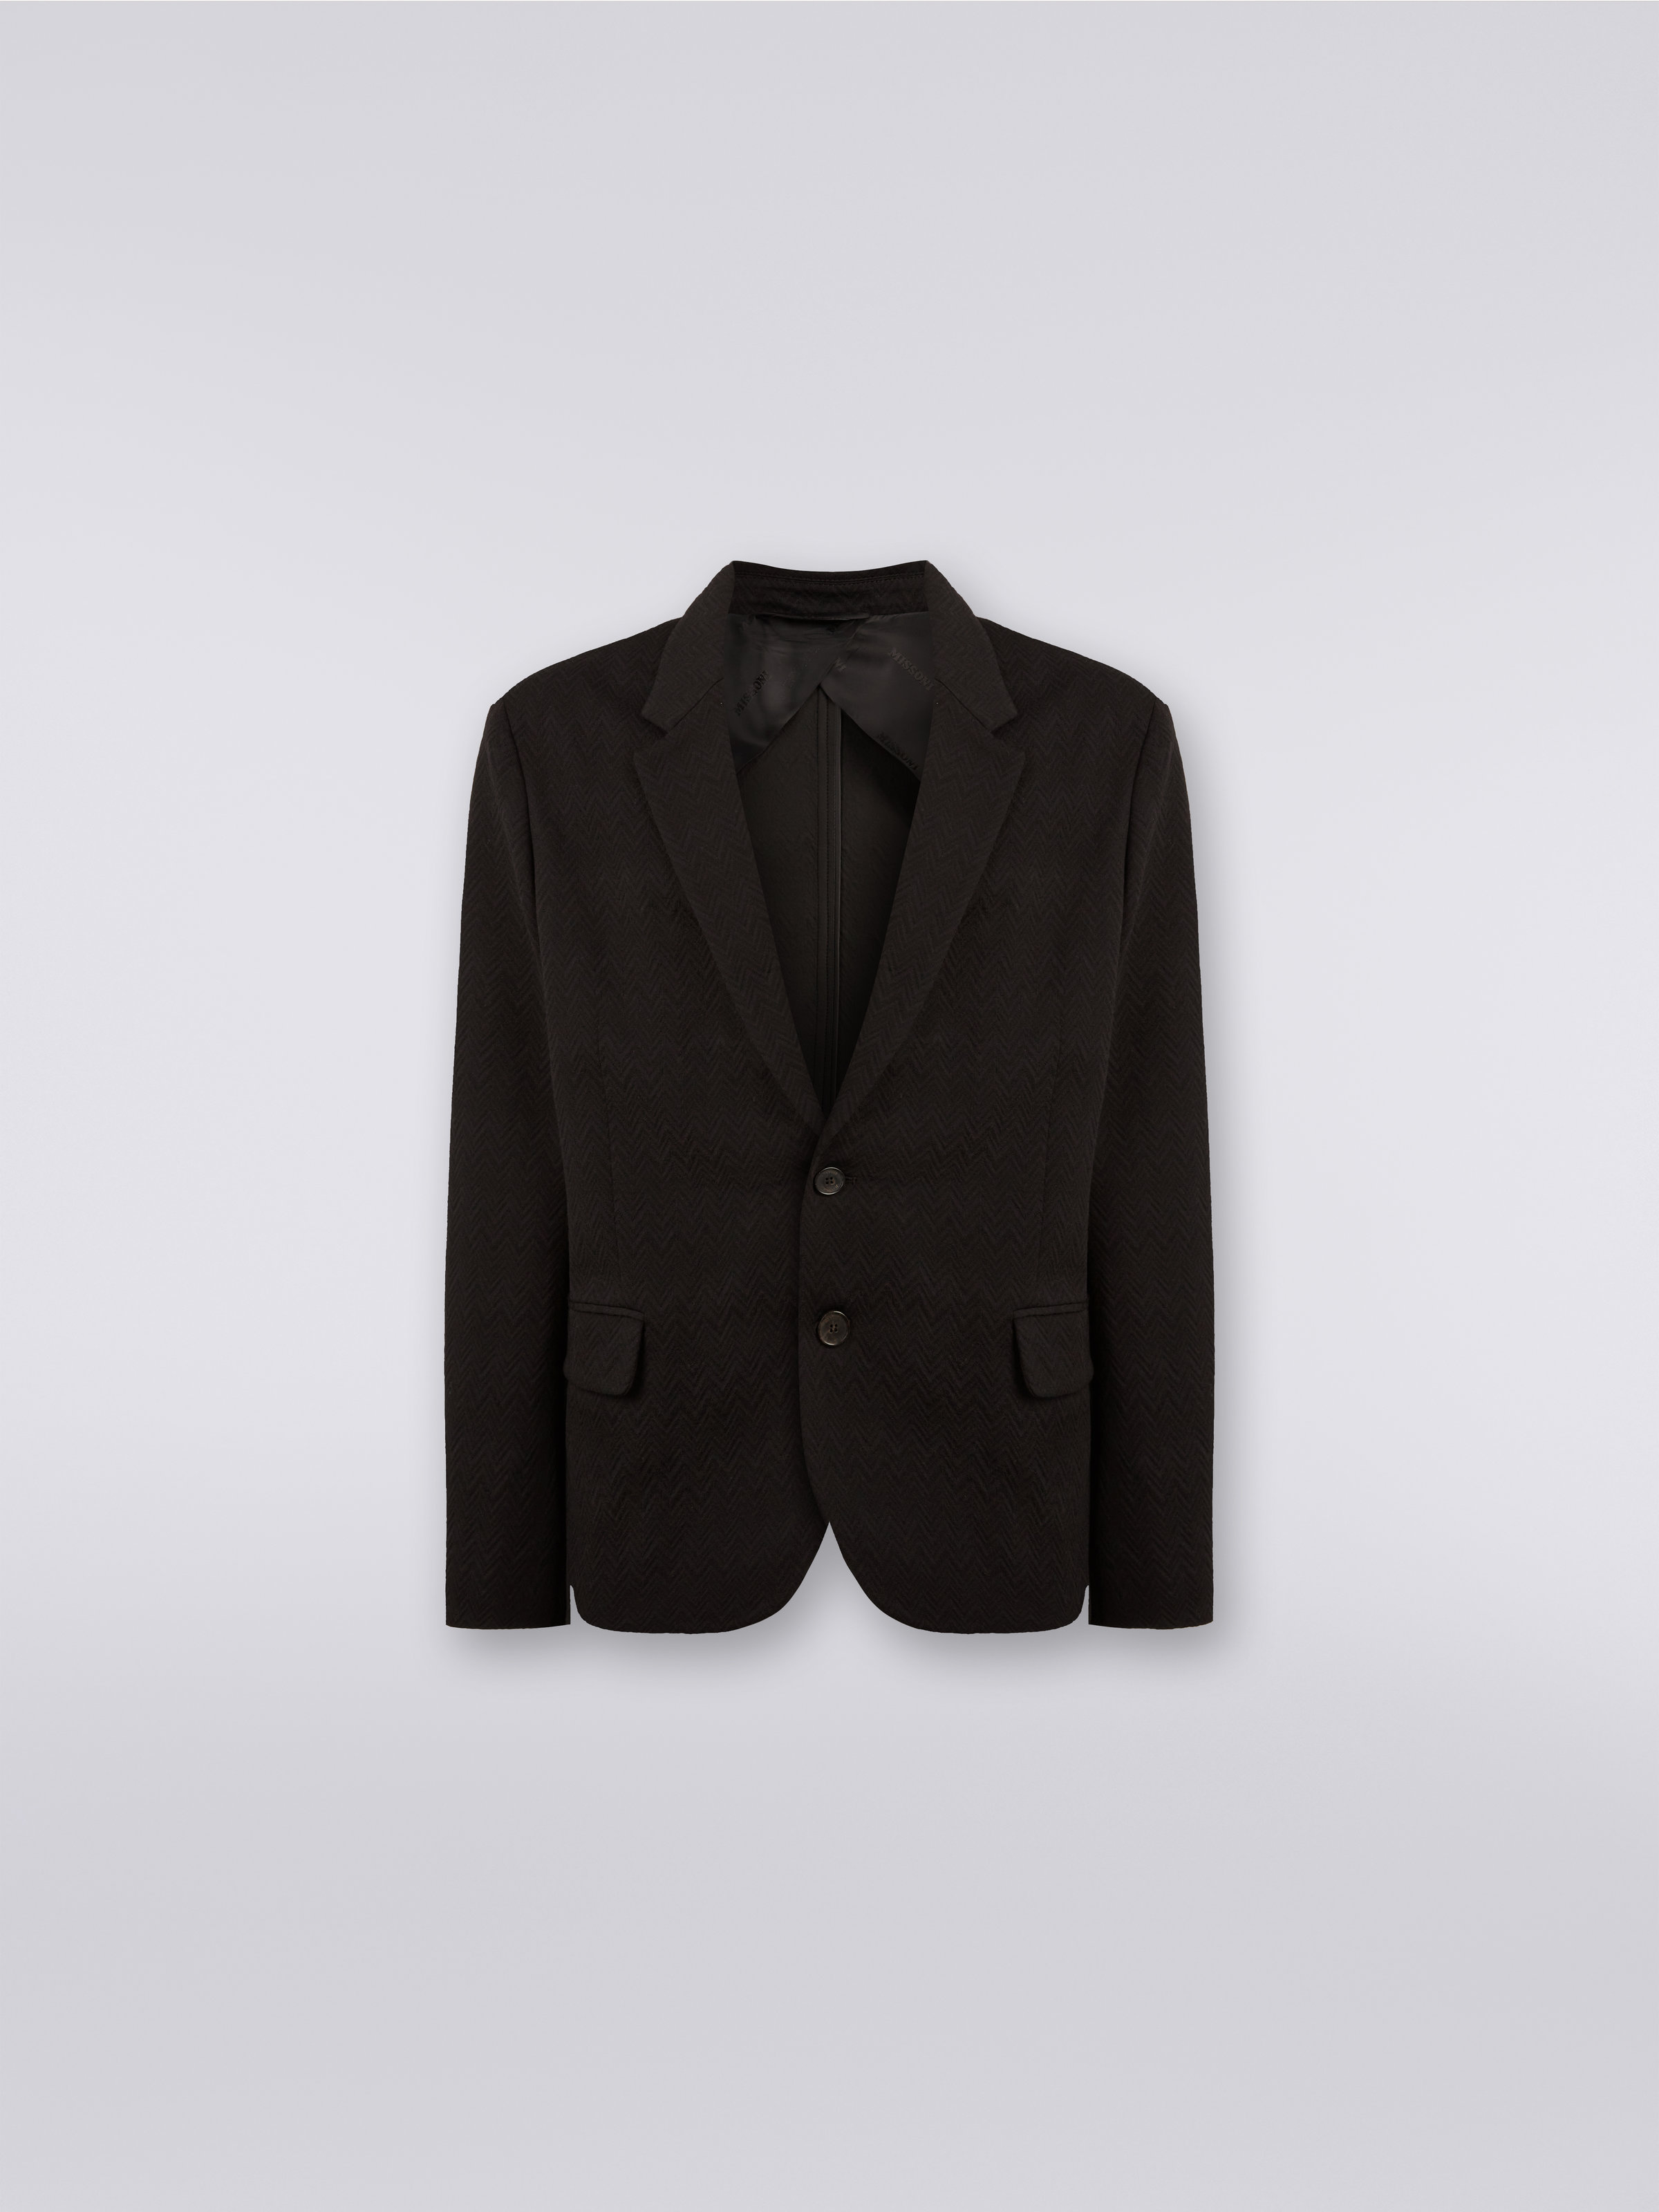 Wool blend jacket with chevron pattern, Black    - 0